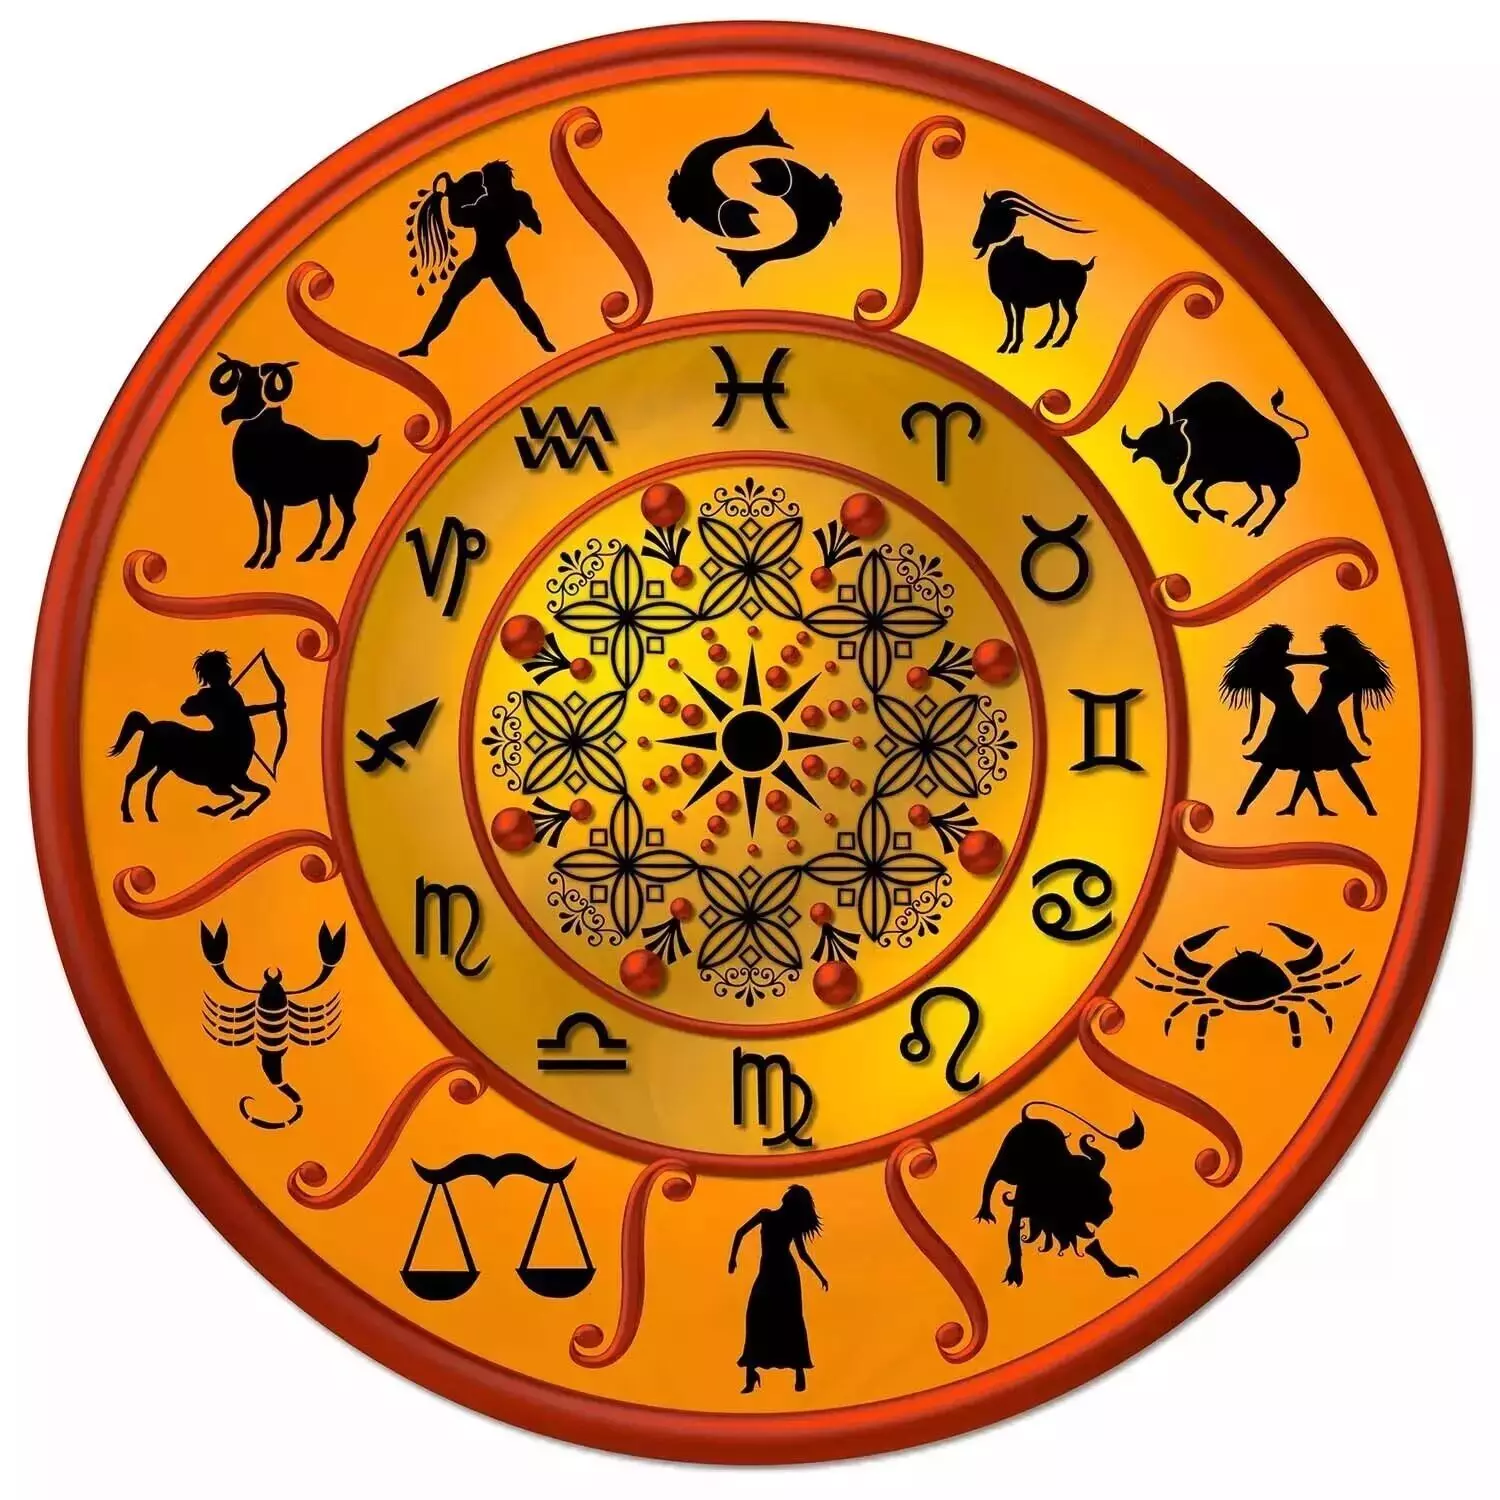 26 November – Know your todays horoscope